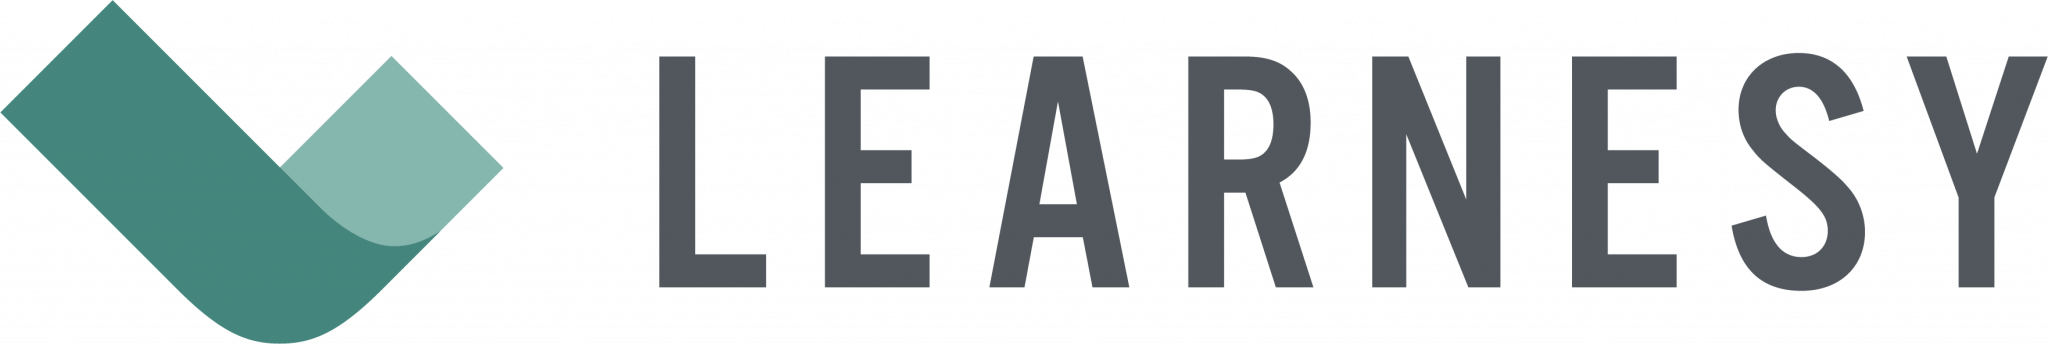 learnesy-logo